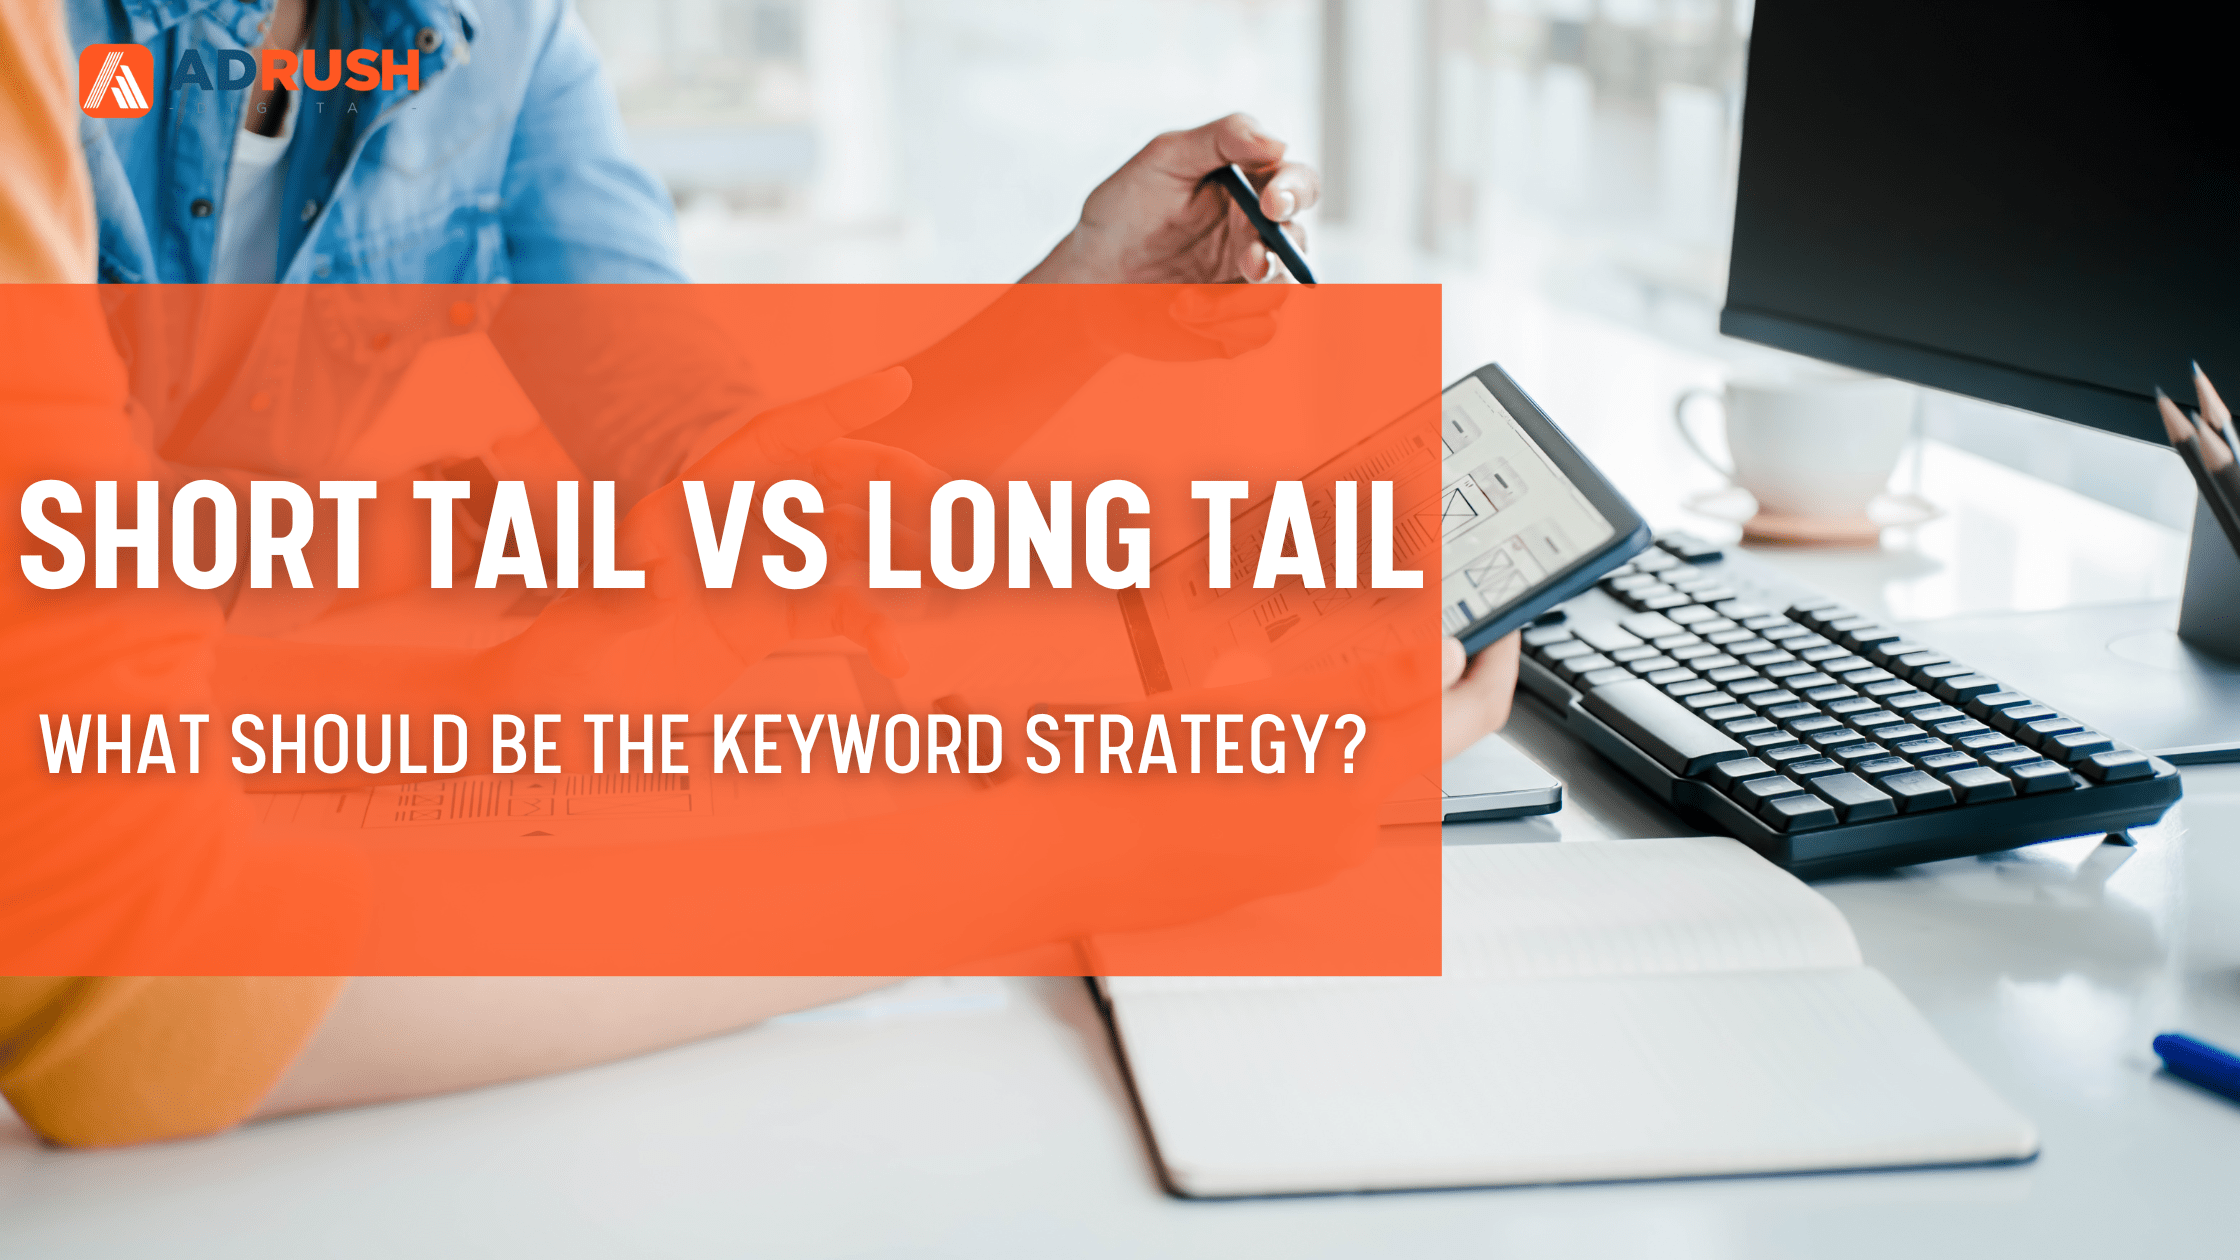 Short tail vs long tail keywords